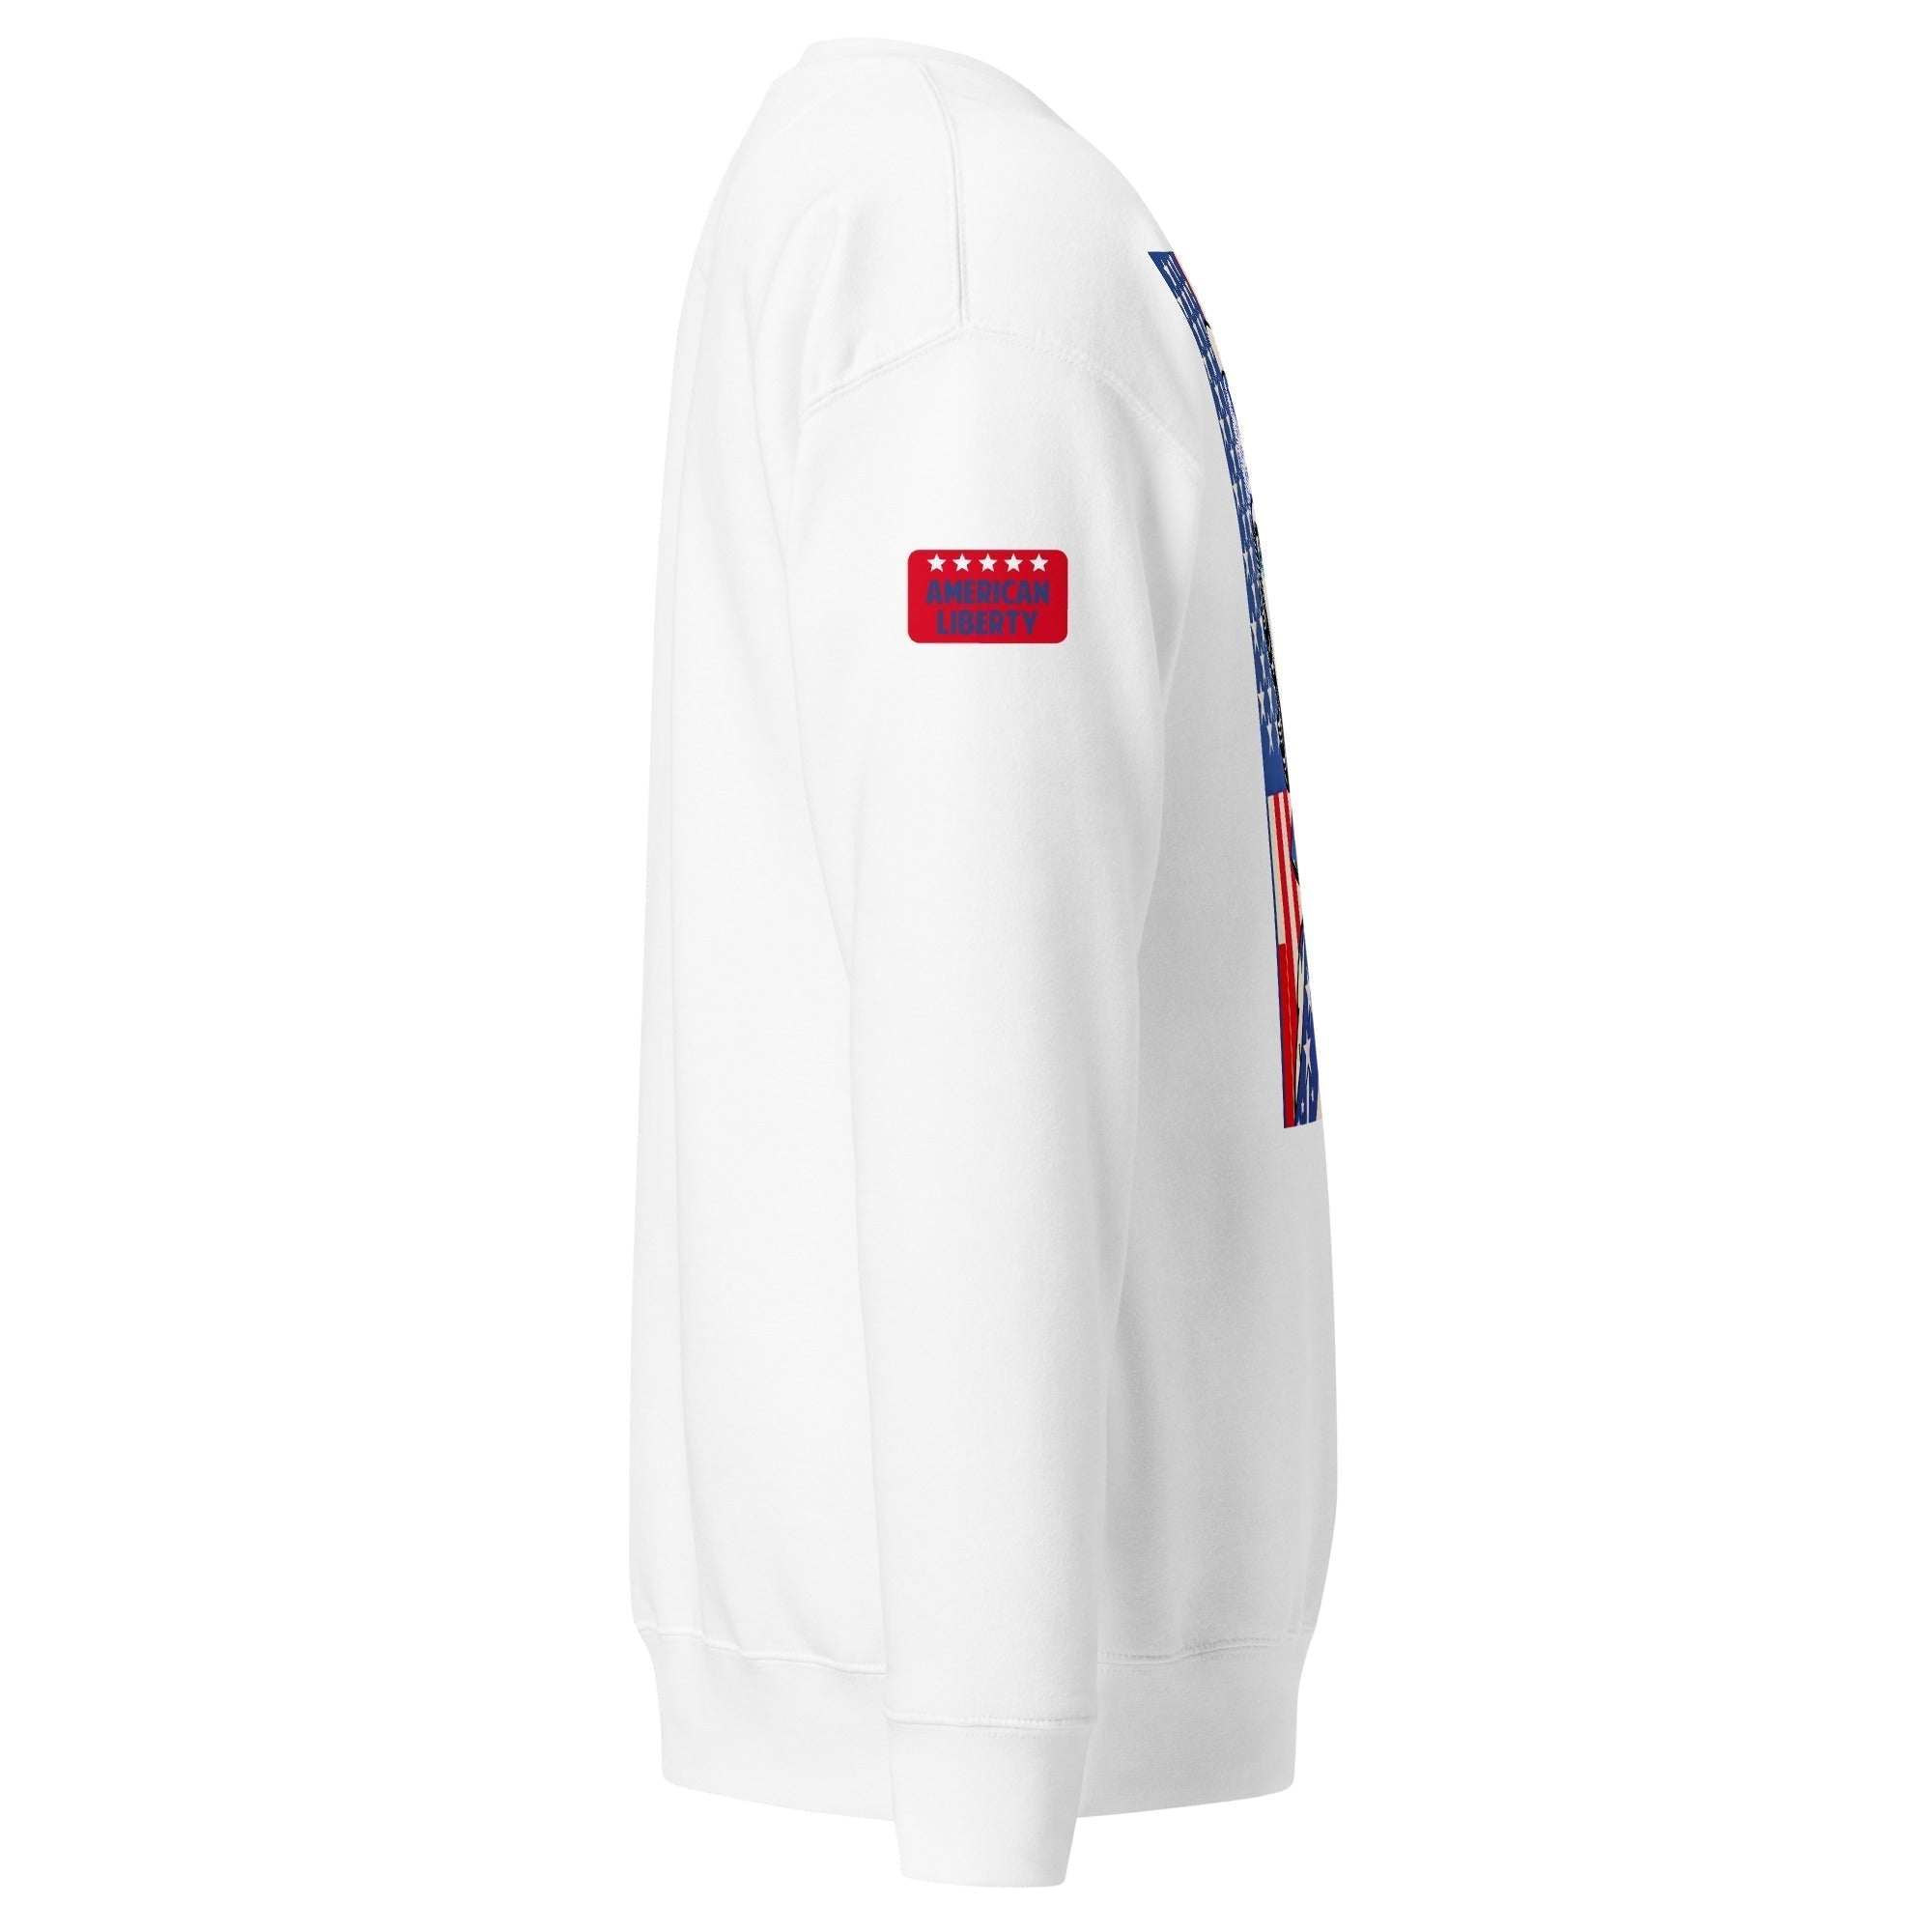 Unisex Premium Sweatshirt - American Liberty Series v.33 - GRAPHIC T-SHIRTS